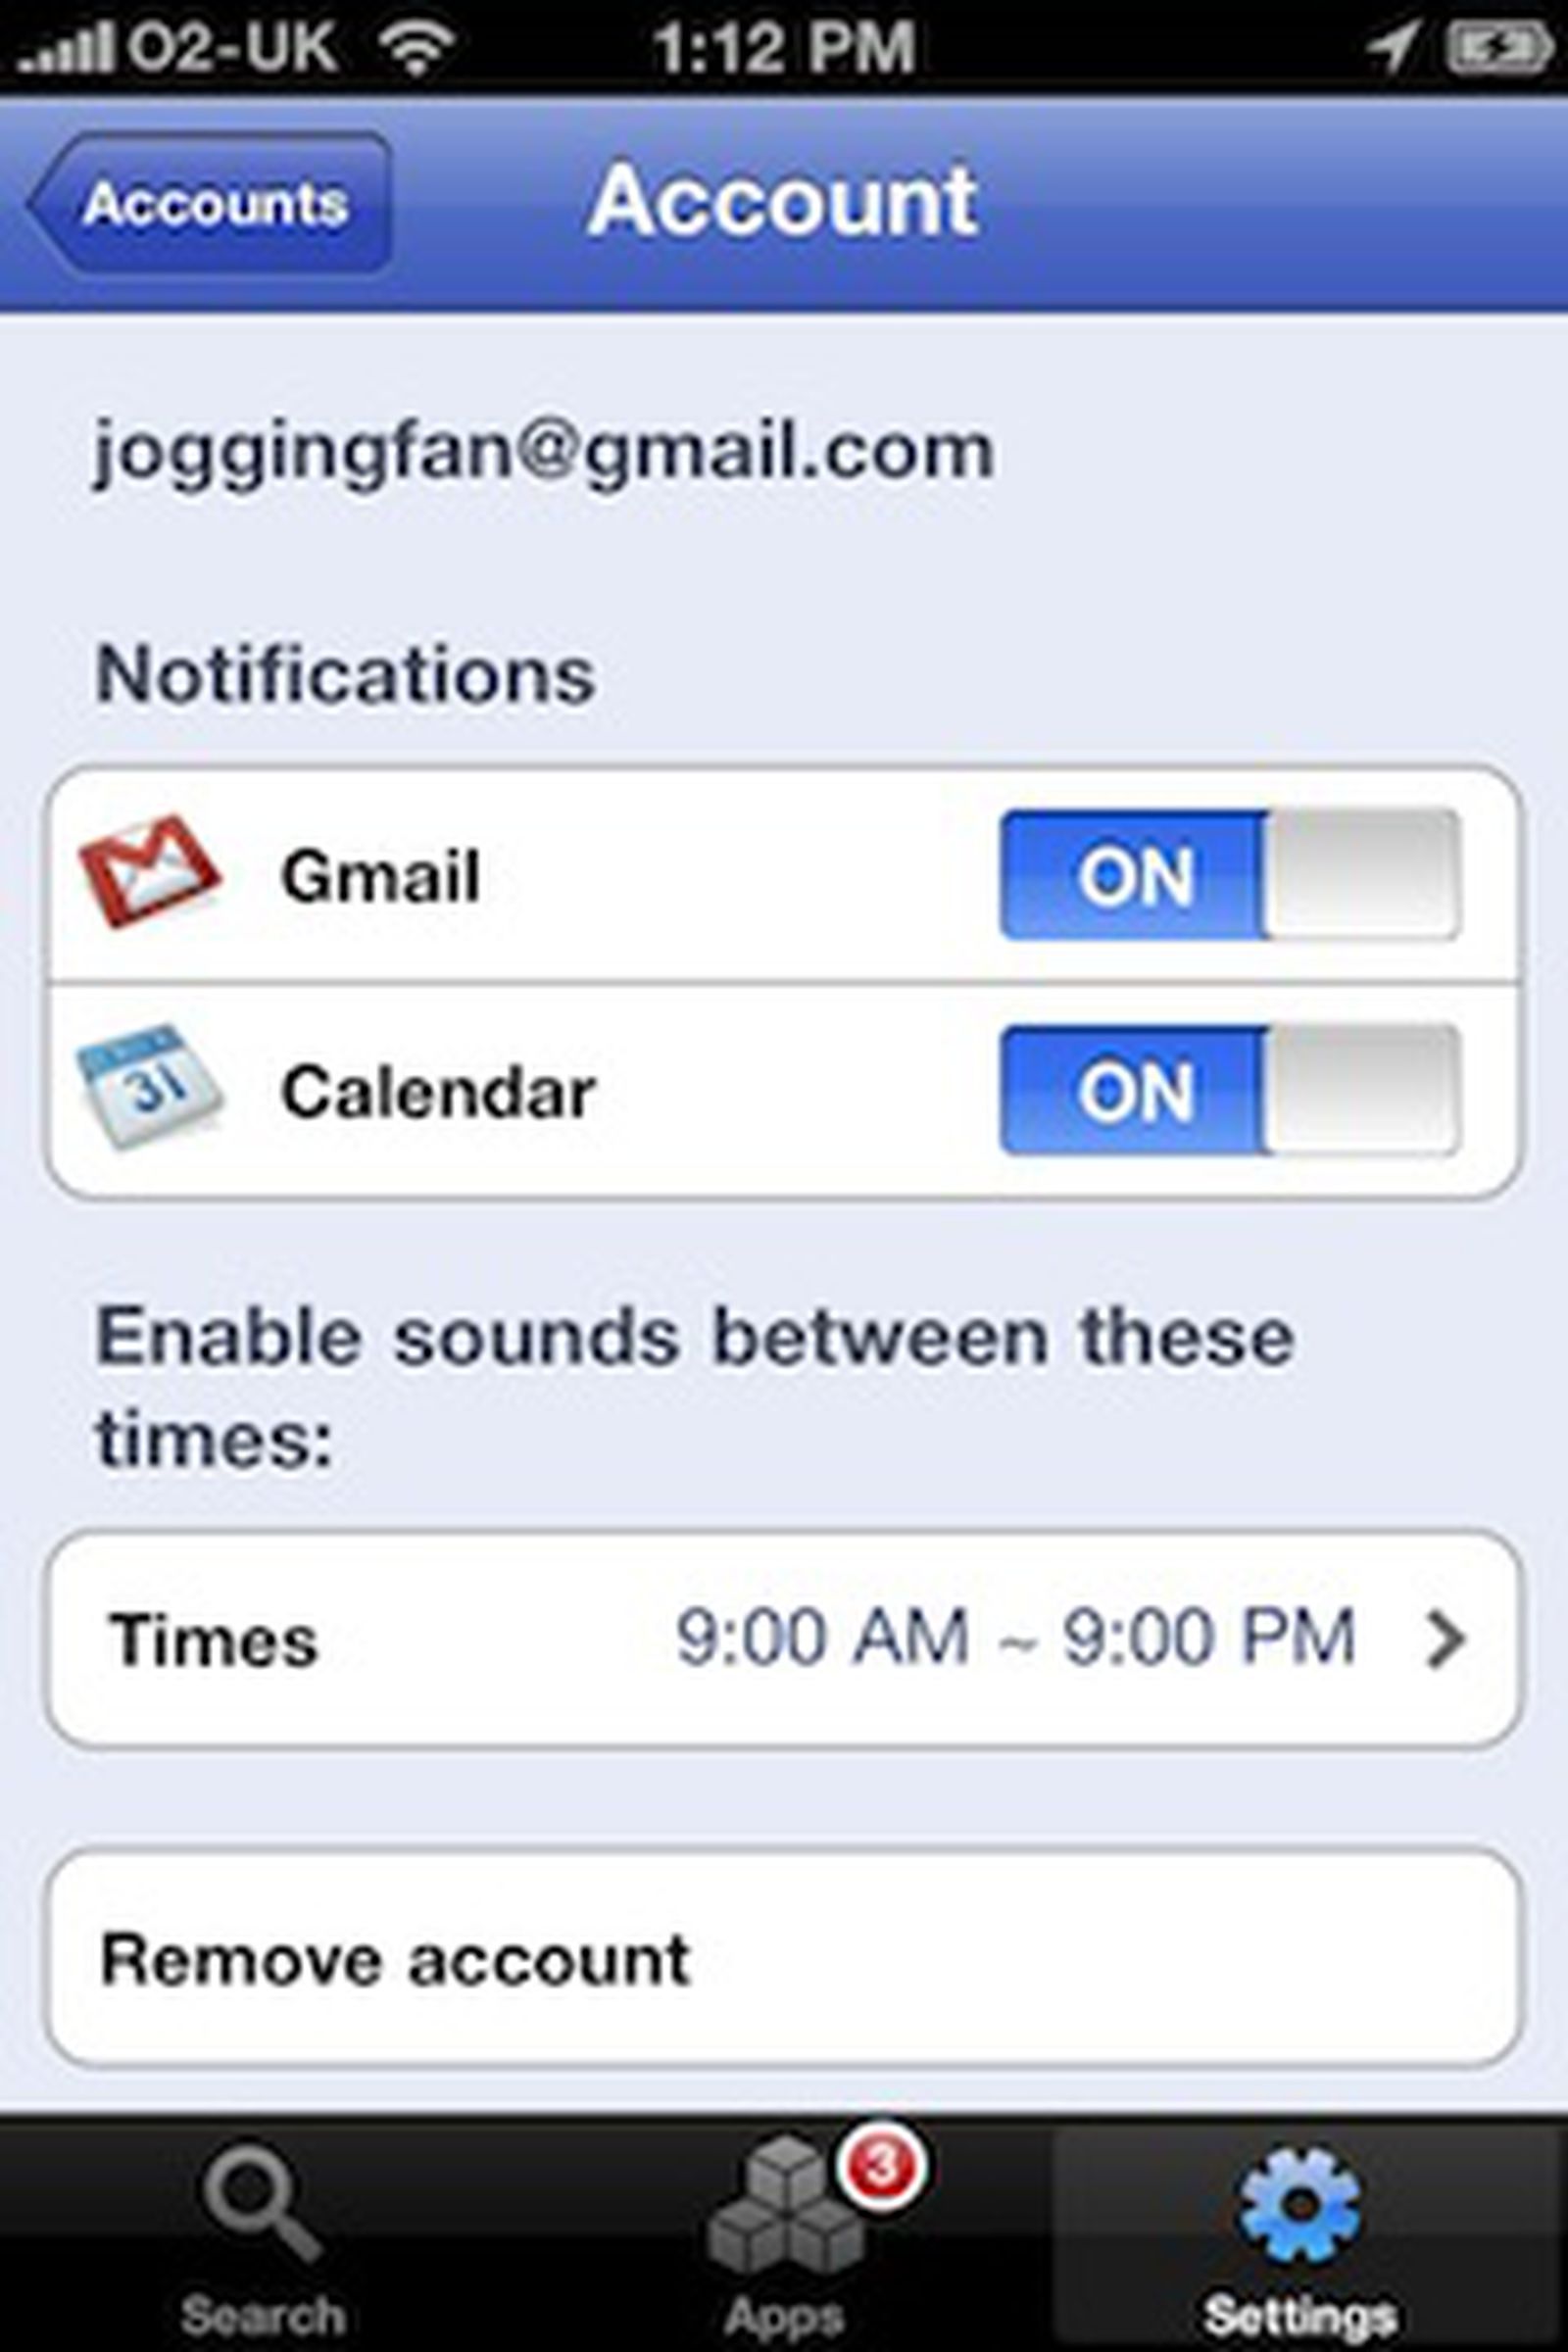 Google Adds Gmail and Calendar Push Notifications to iPhone App MacRumors